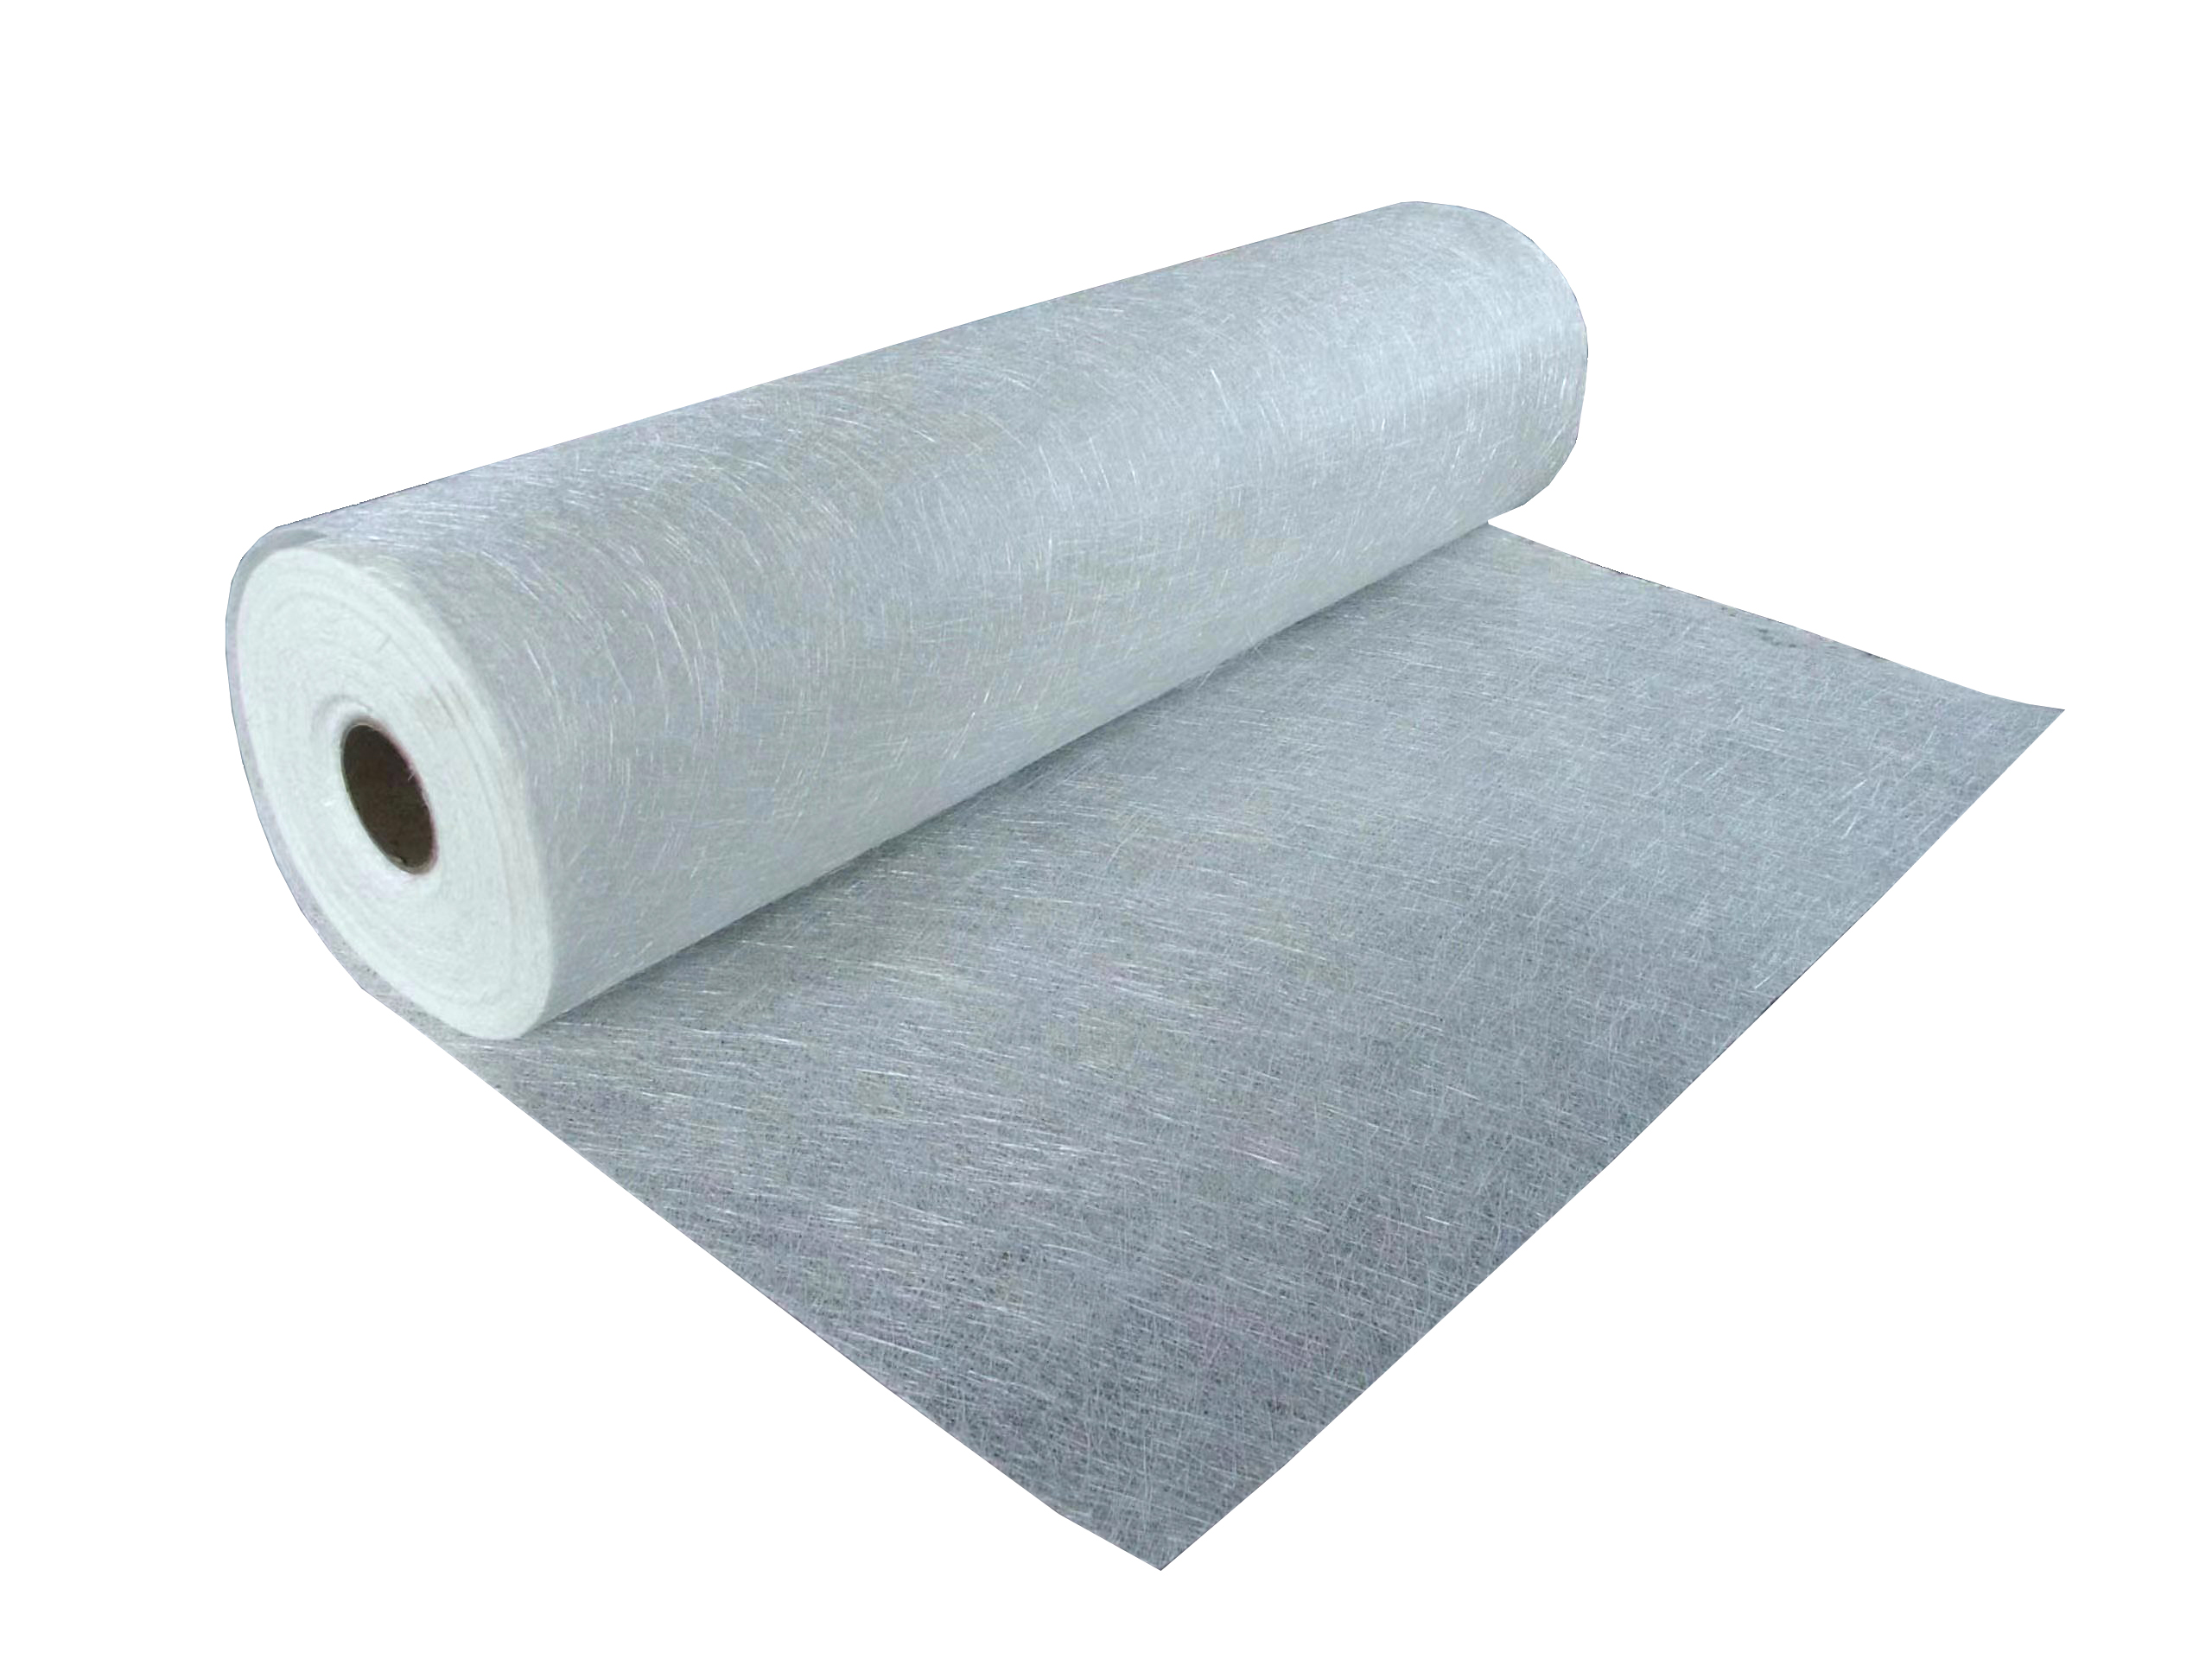 What are fiberglass mat?